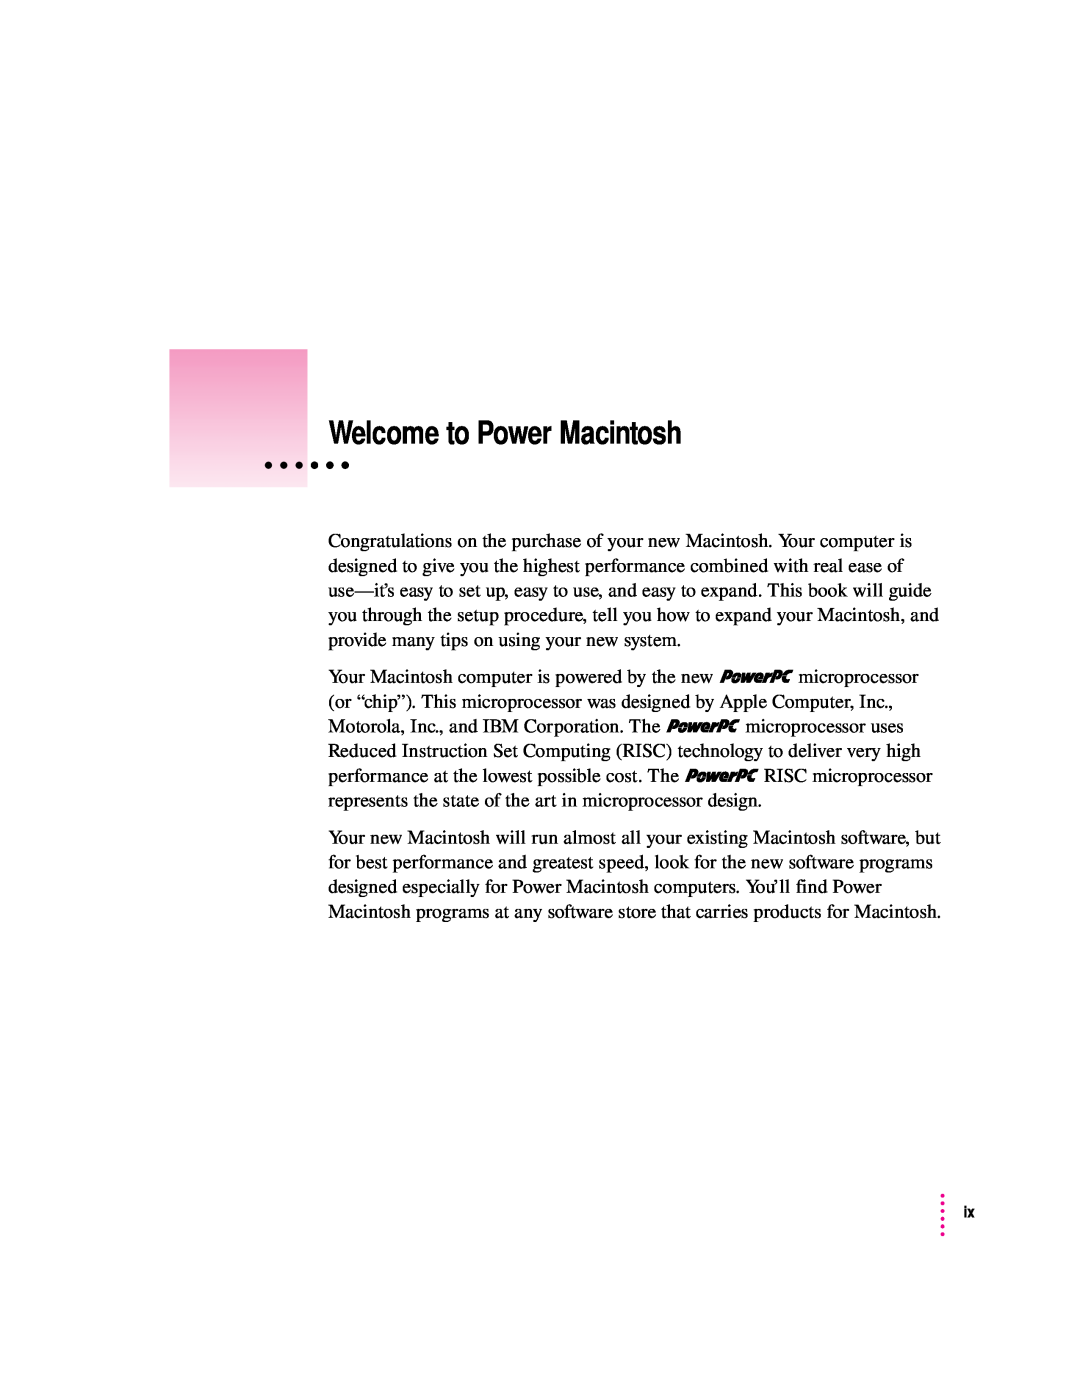 Apple 8100 Series manual Welcome to Power Macintosh 